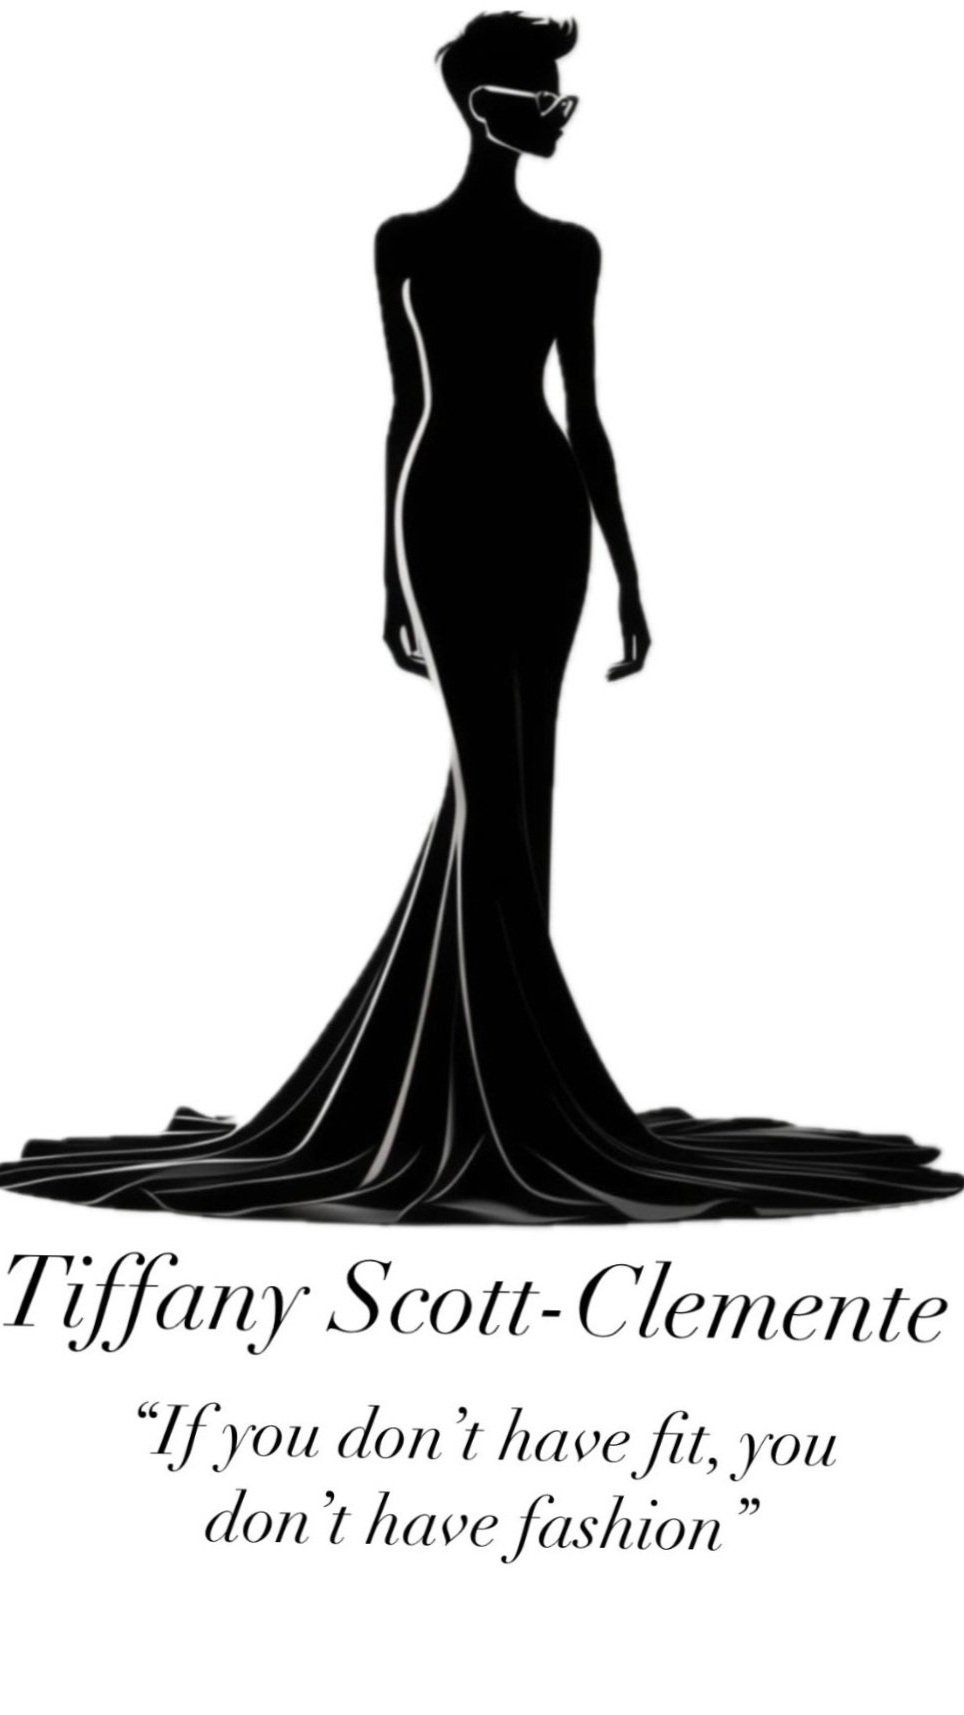 Tiffany Scott-Clemente